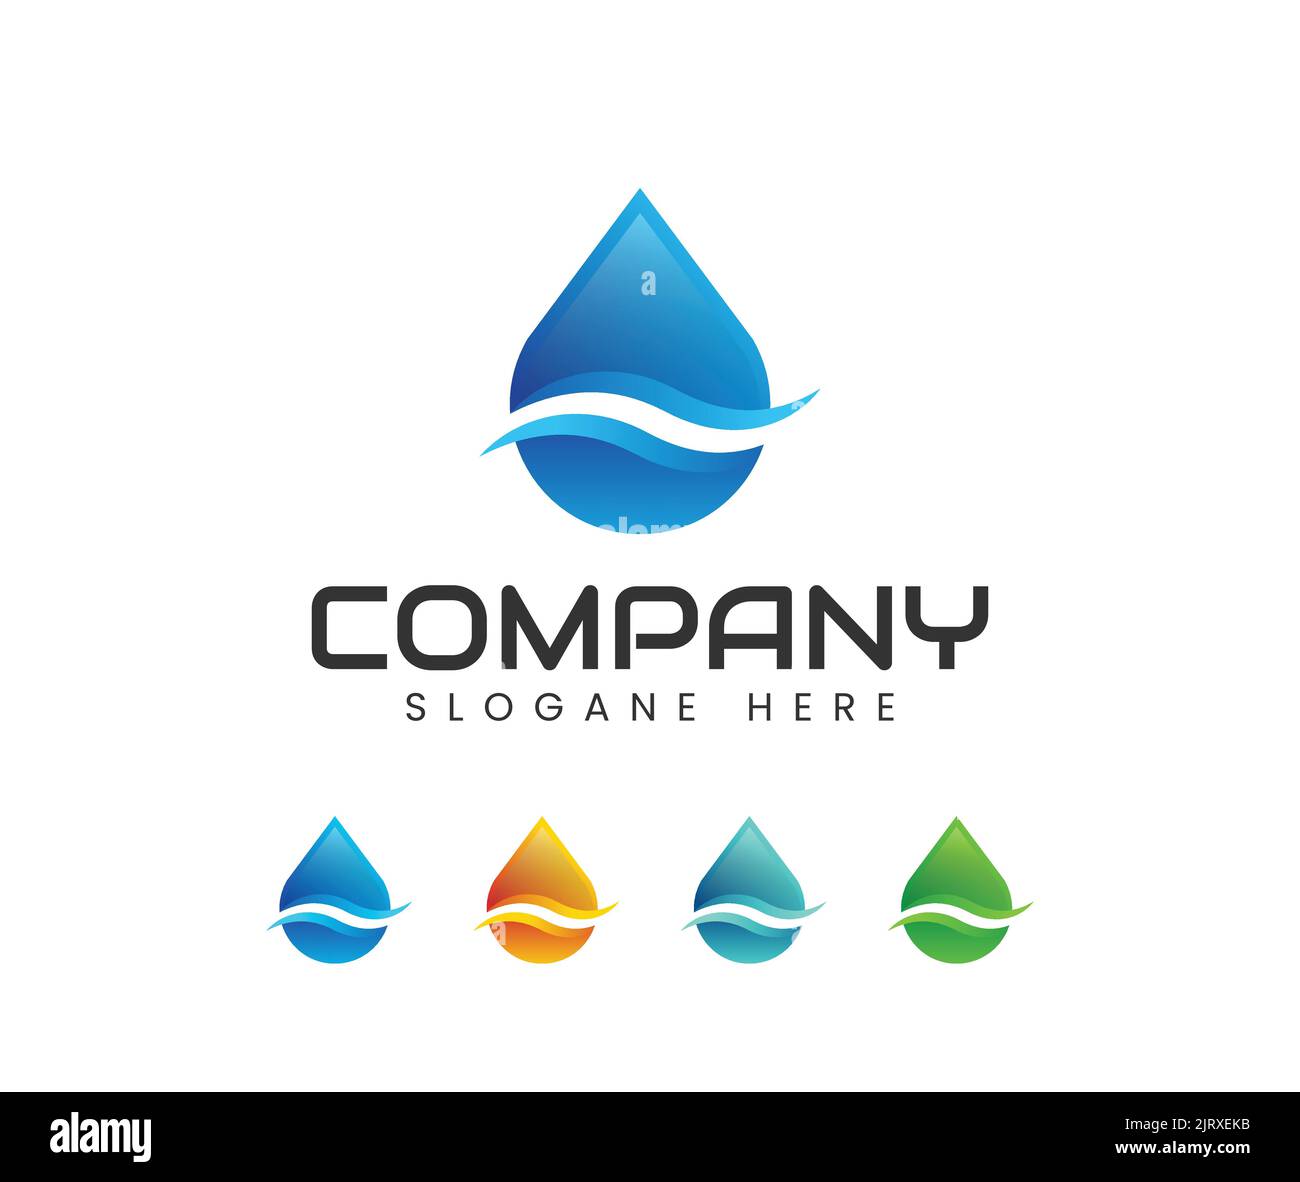 Plumbing logo design. Plumb Service logo designs Template with water symbol, Plumbing logo designs vector Stock Vector